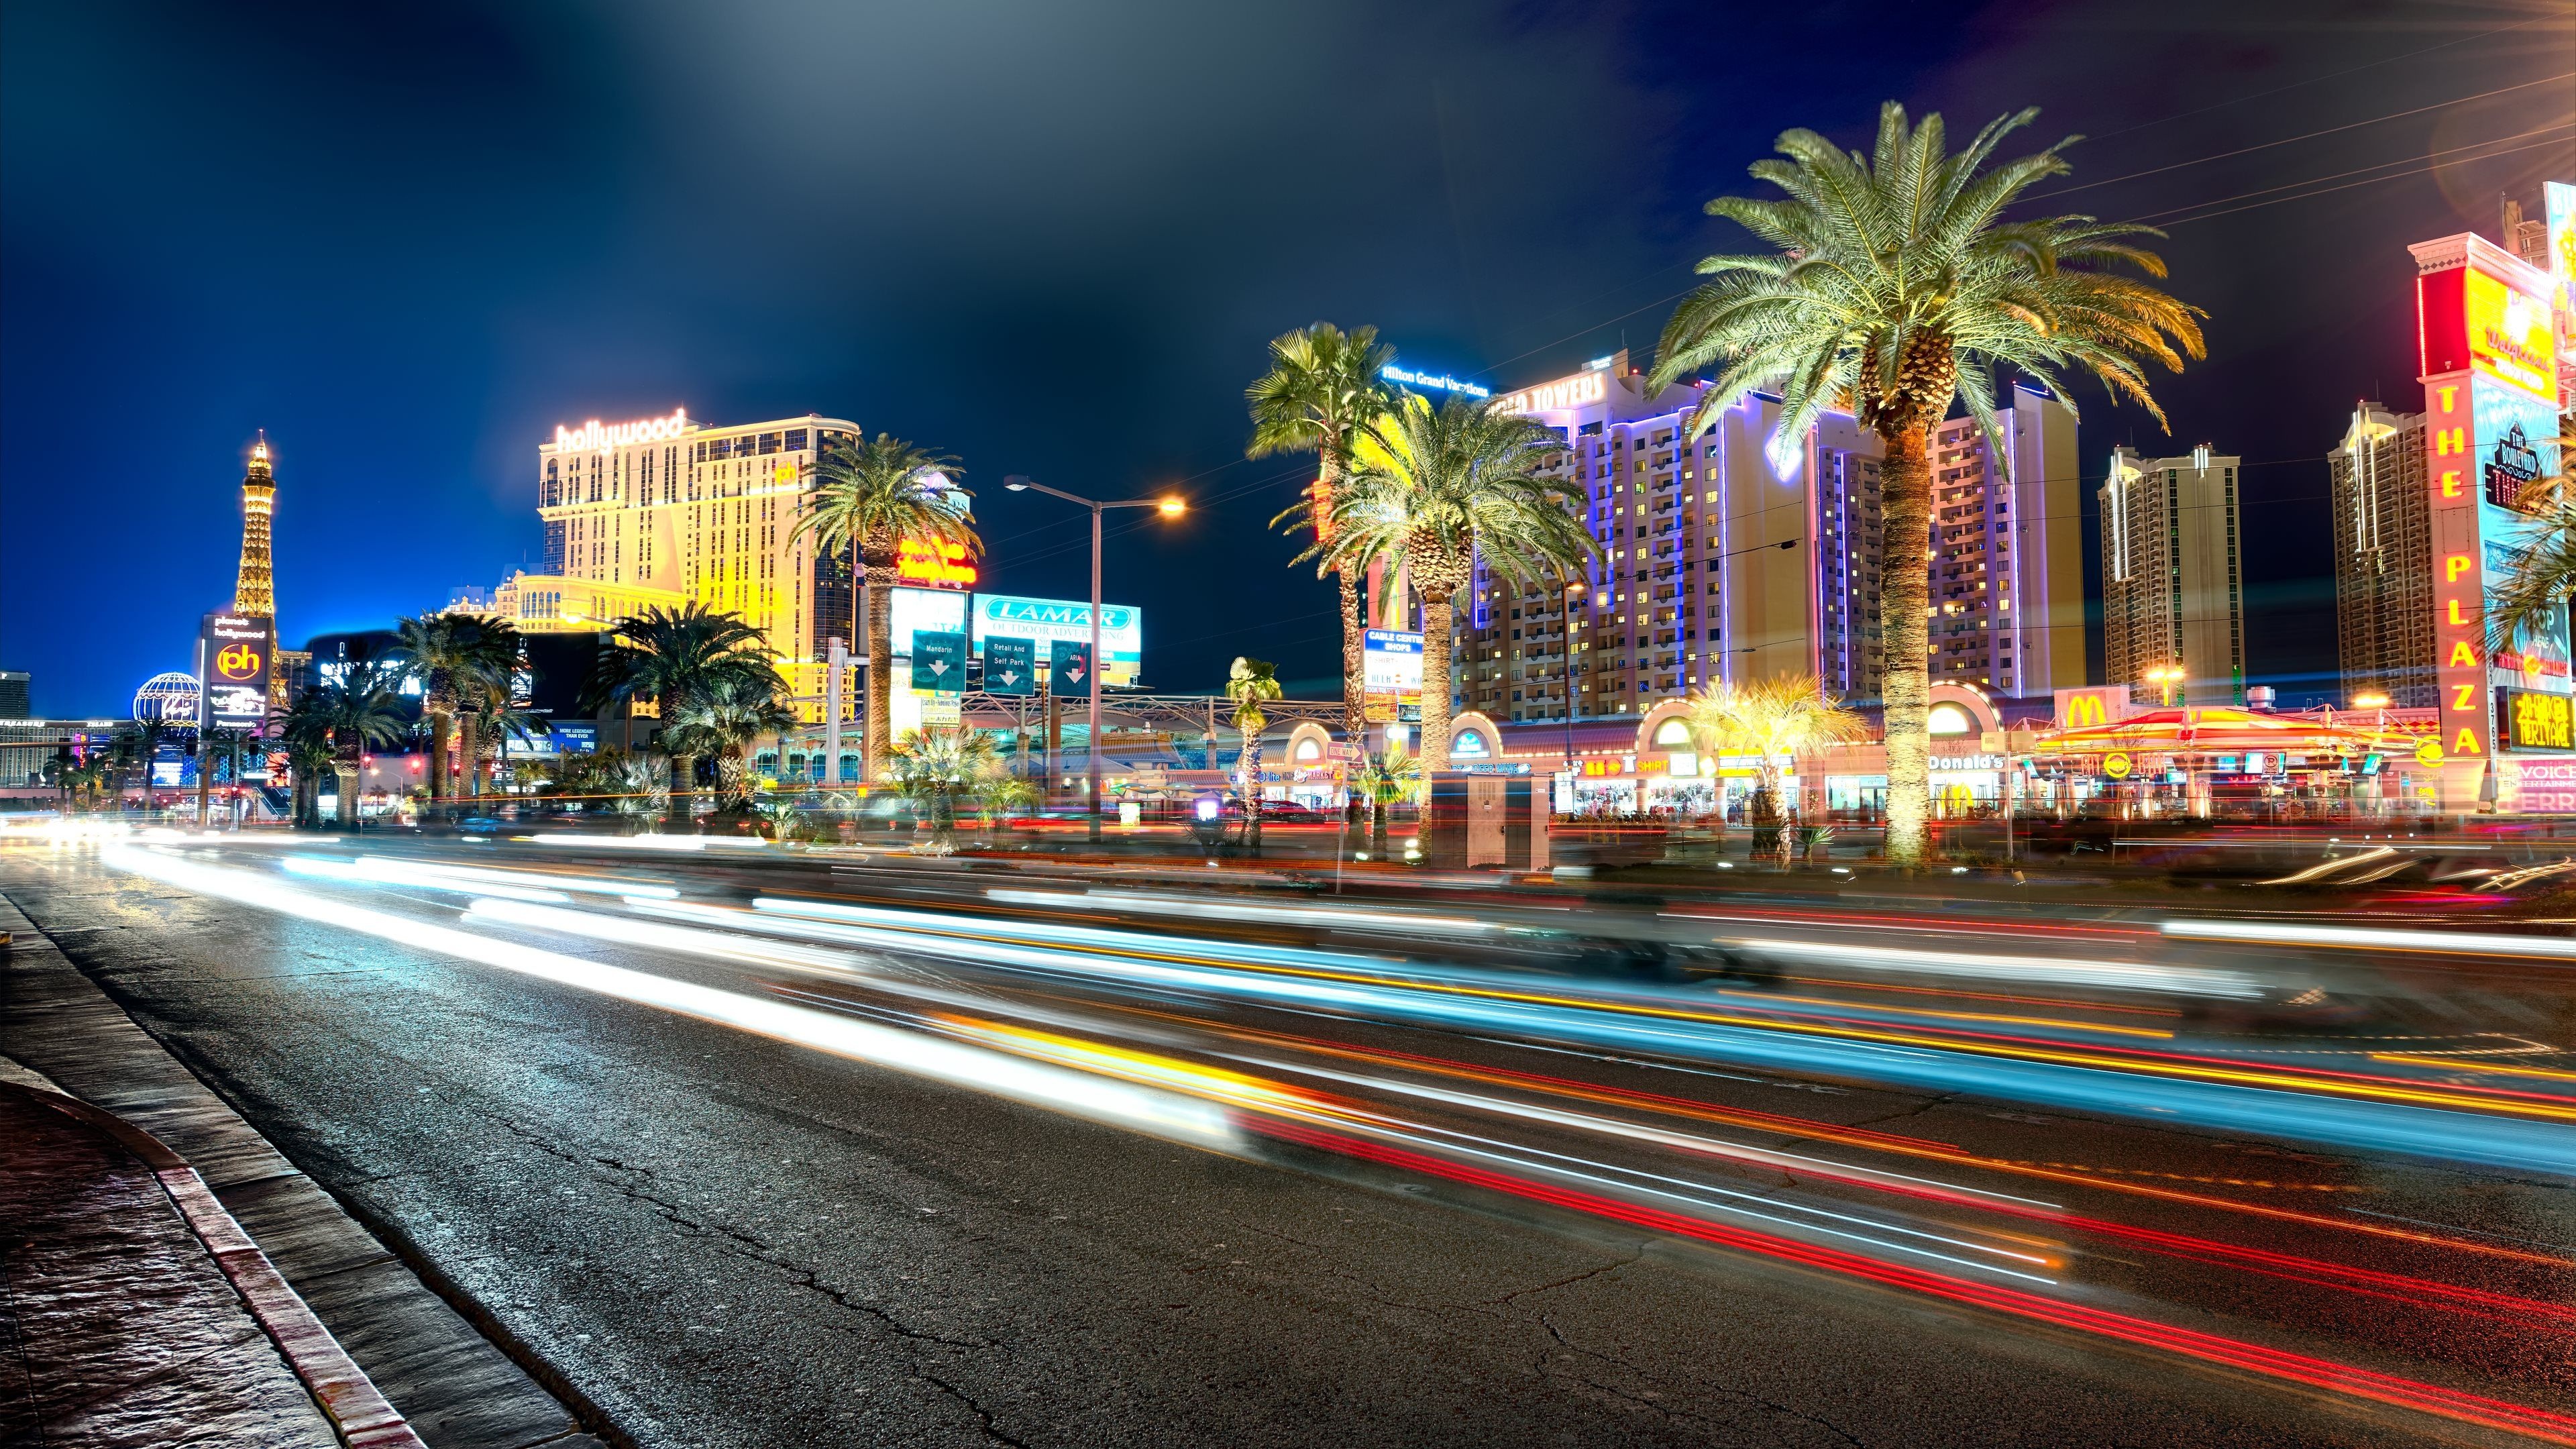 4K Vegas wallpapers, High-resolution images, Stunning cityscape, Travel inspiration, 3840x2160 4K Desktop